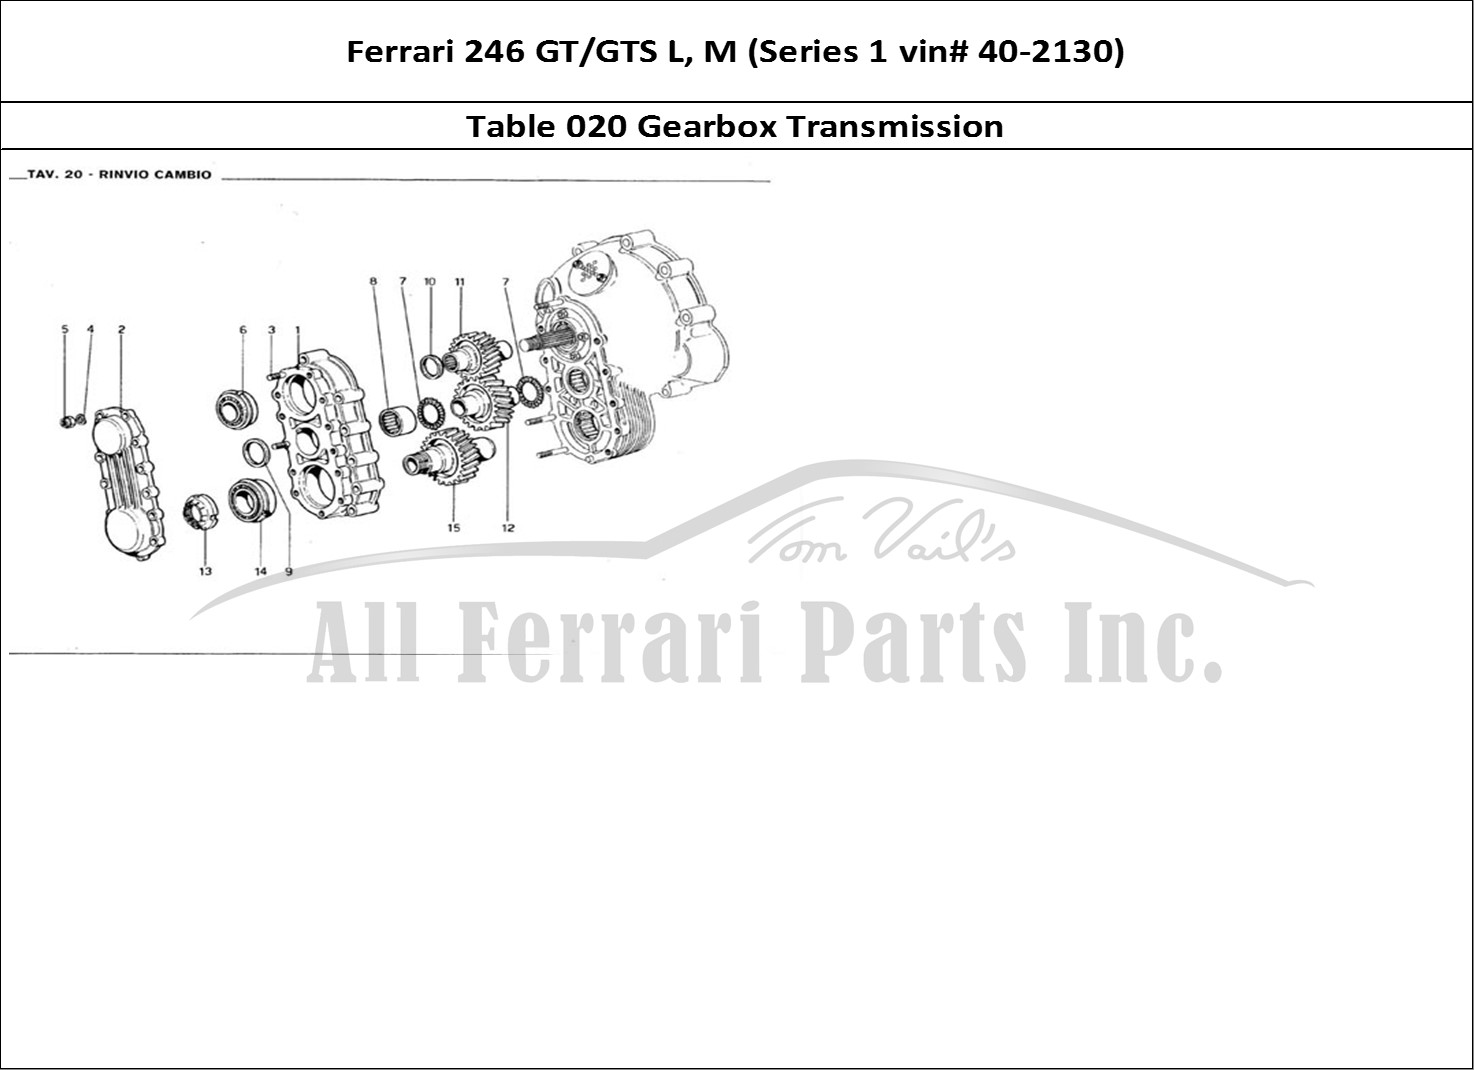 Ferrari Parts Ferrari 246 GT Series 1 Page 020 Gearbox Transmission